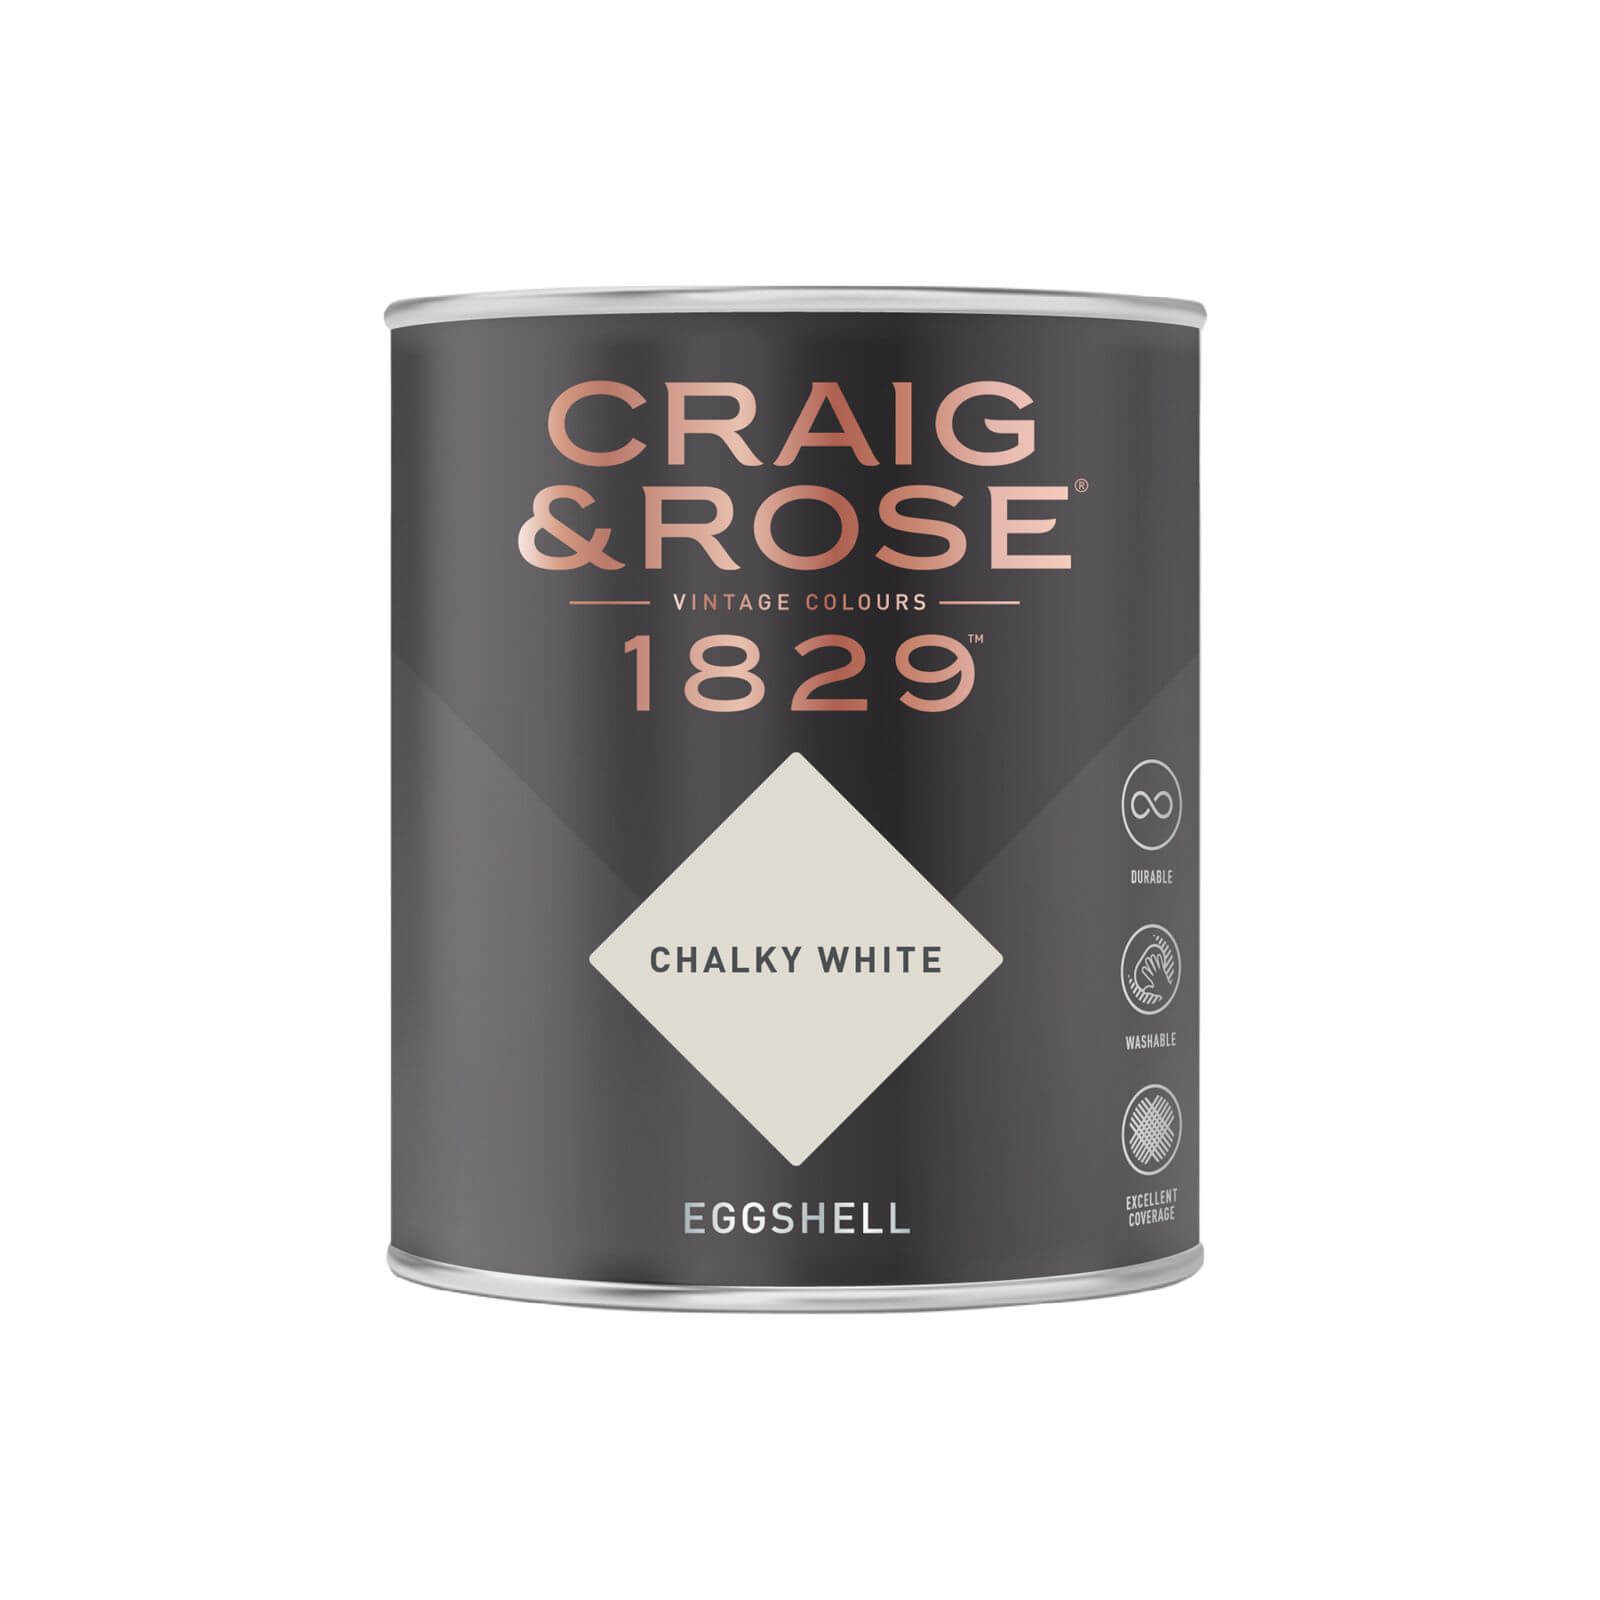 Craig & Rose 1829 Eggshell Paint Chalky White - 750ml